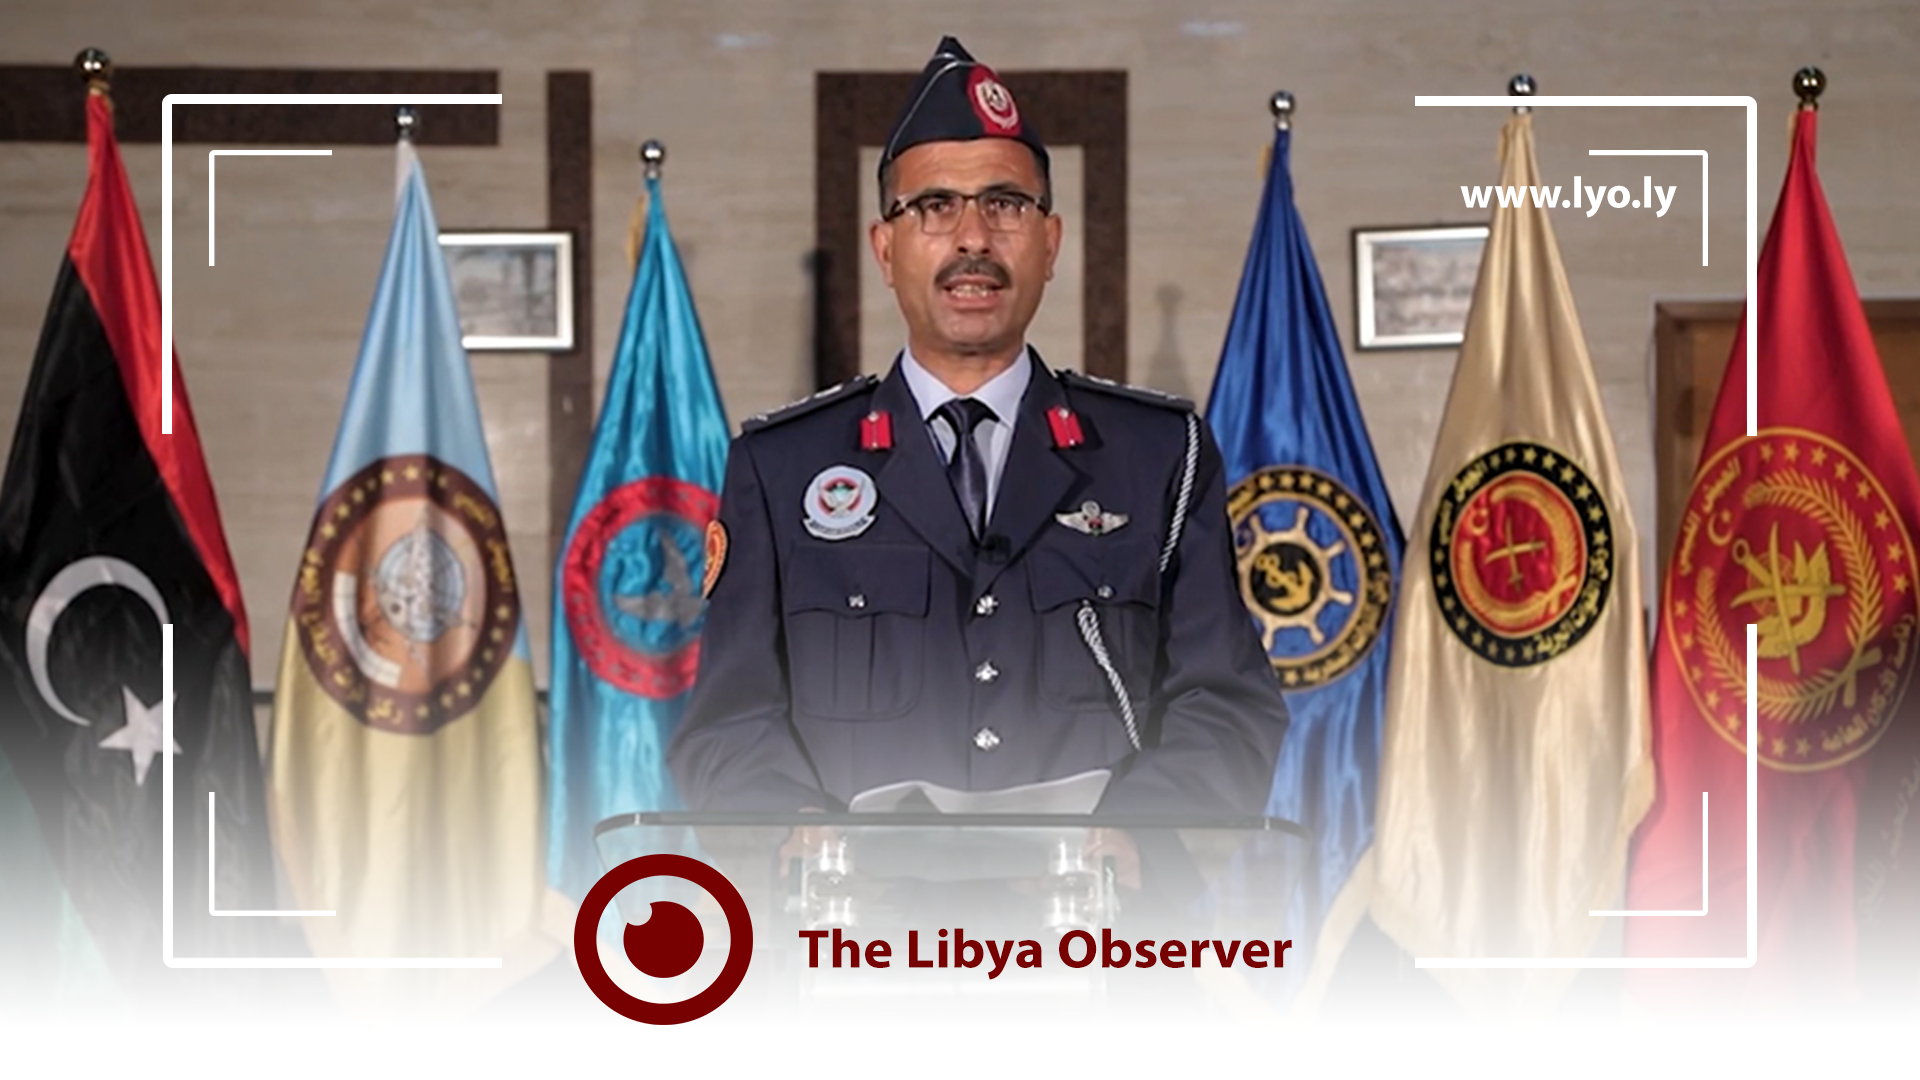 Spokesman of the Libyan Army, Colonel Mohammad Gununu